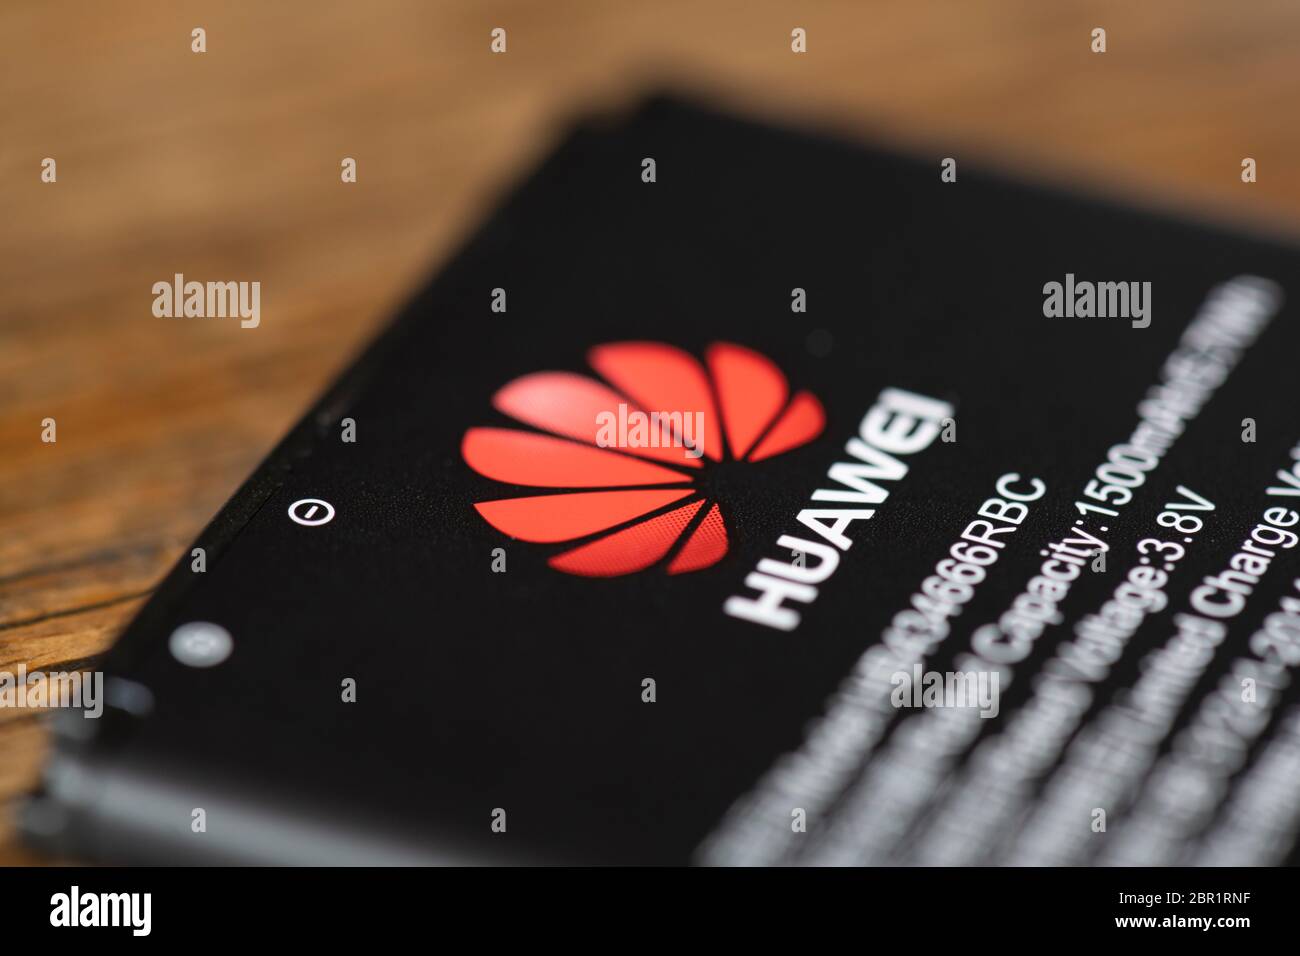 Huawei Logo on battery Stock Photo